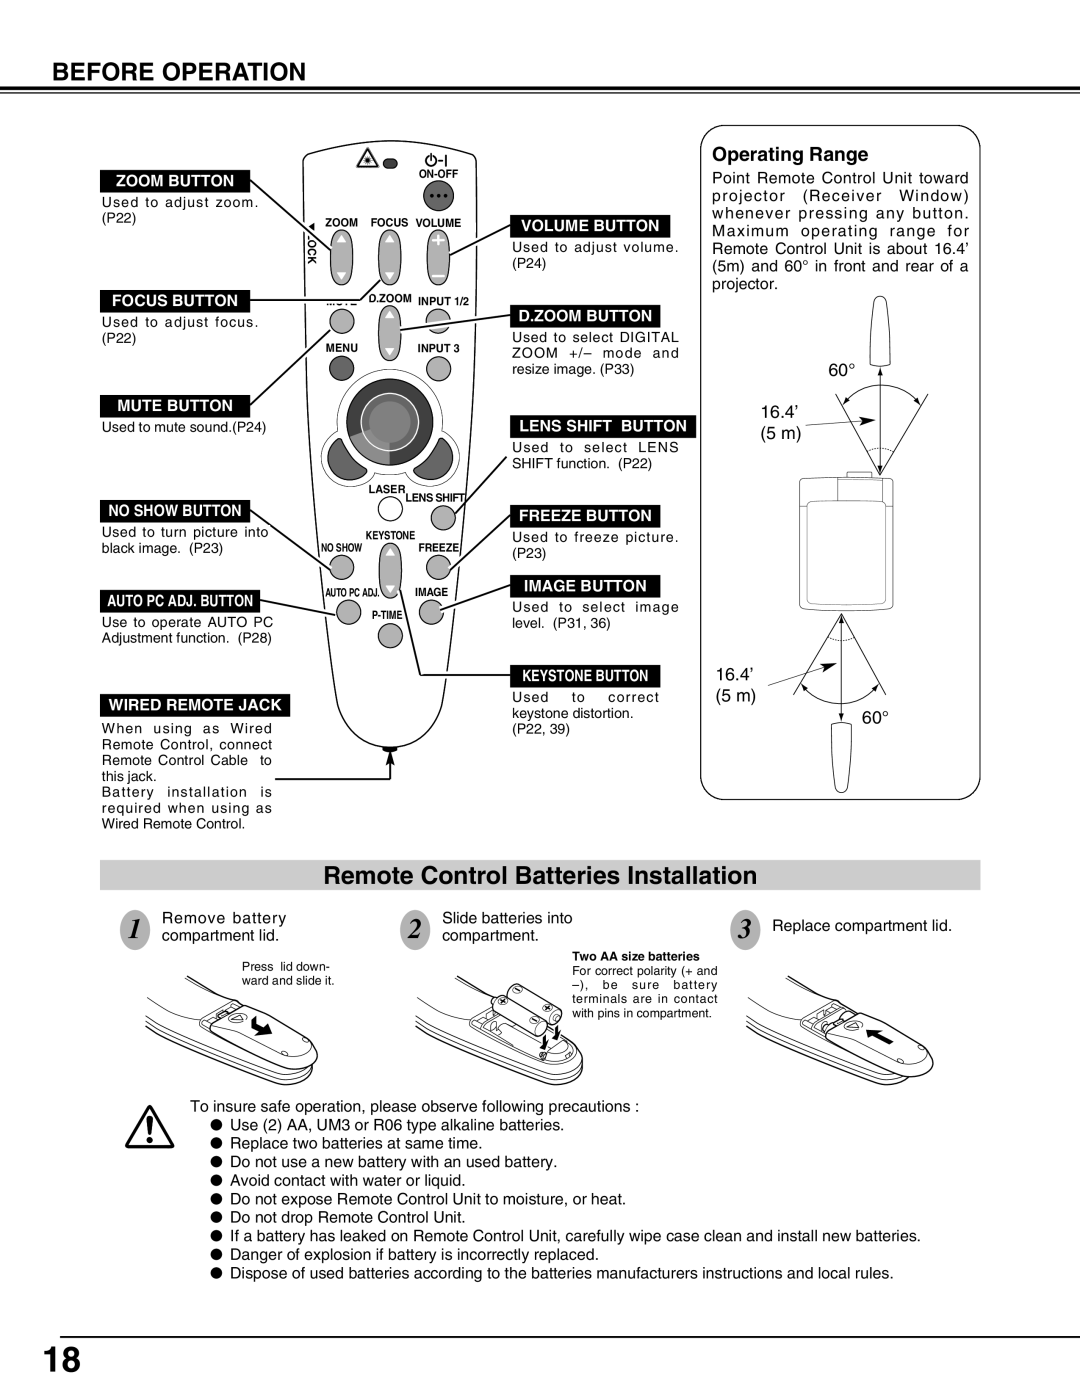 Eiki LC-SX4LA instruction manual Remote Control Batteries Installation, Before Operation, Operating Range, 16.4’ 5 m 